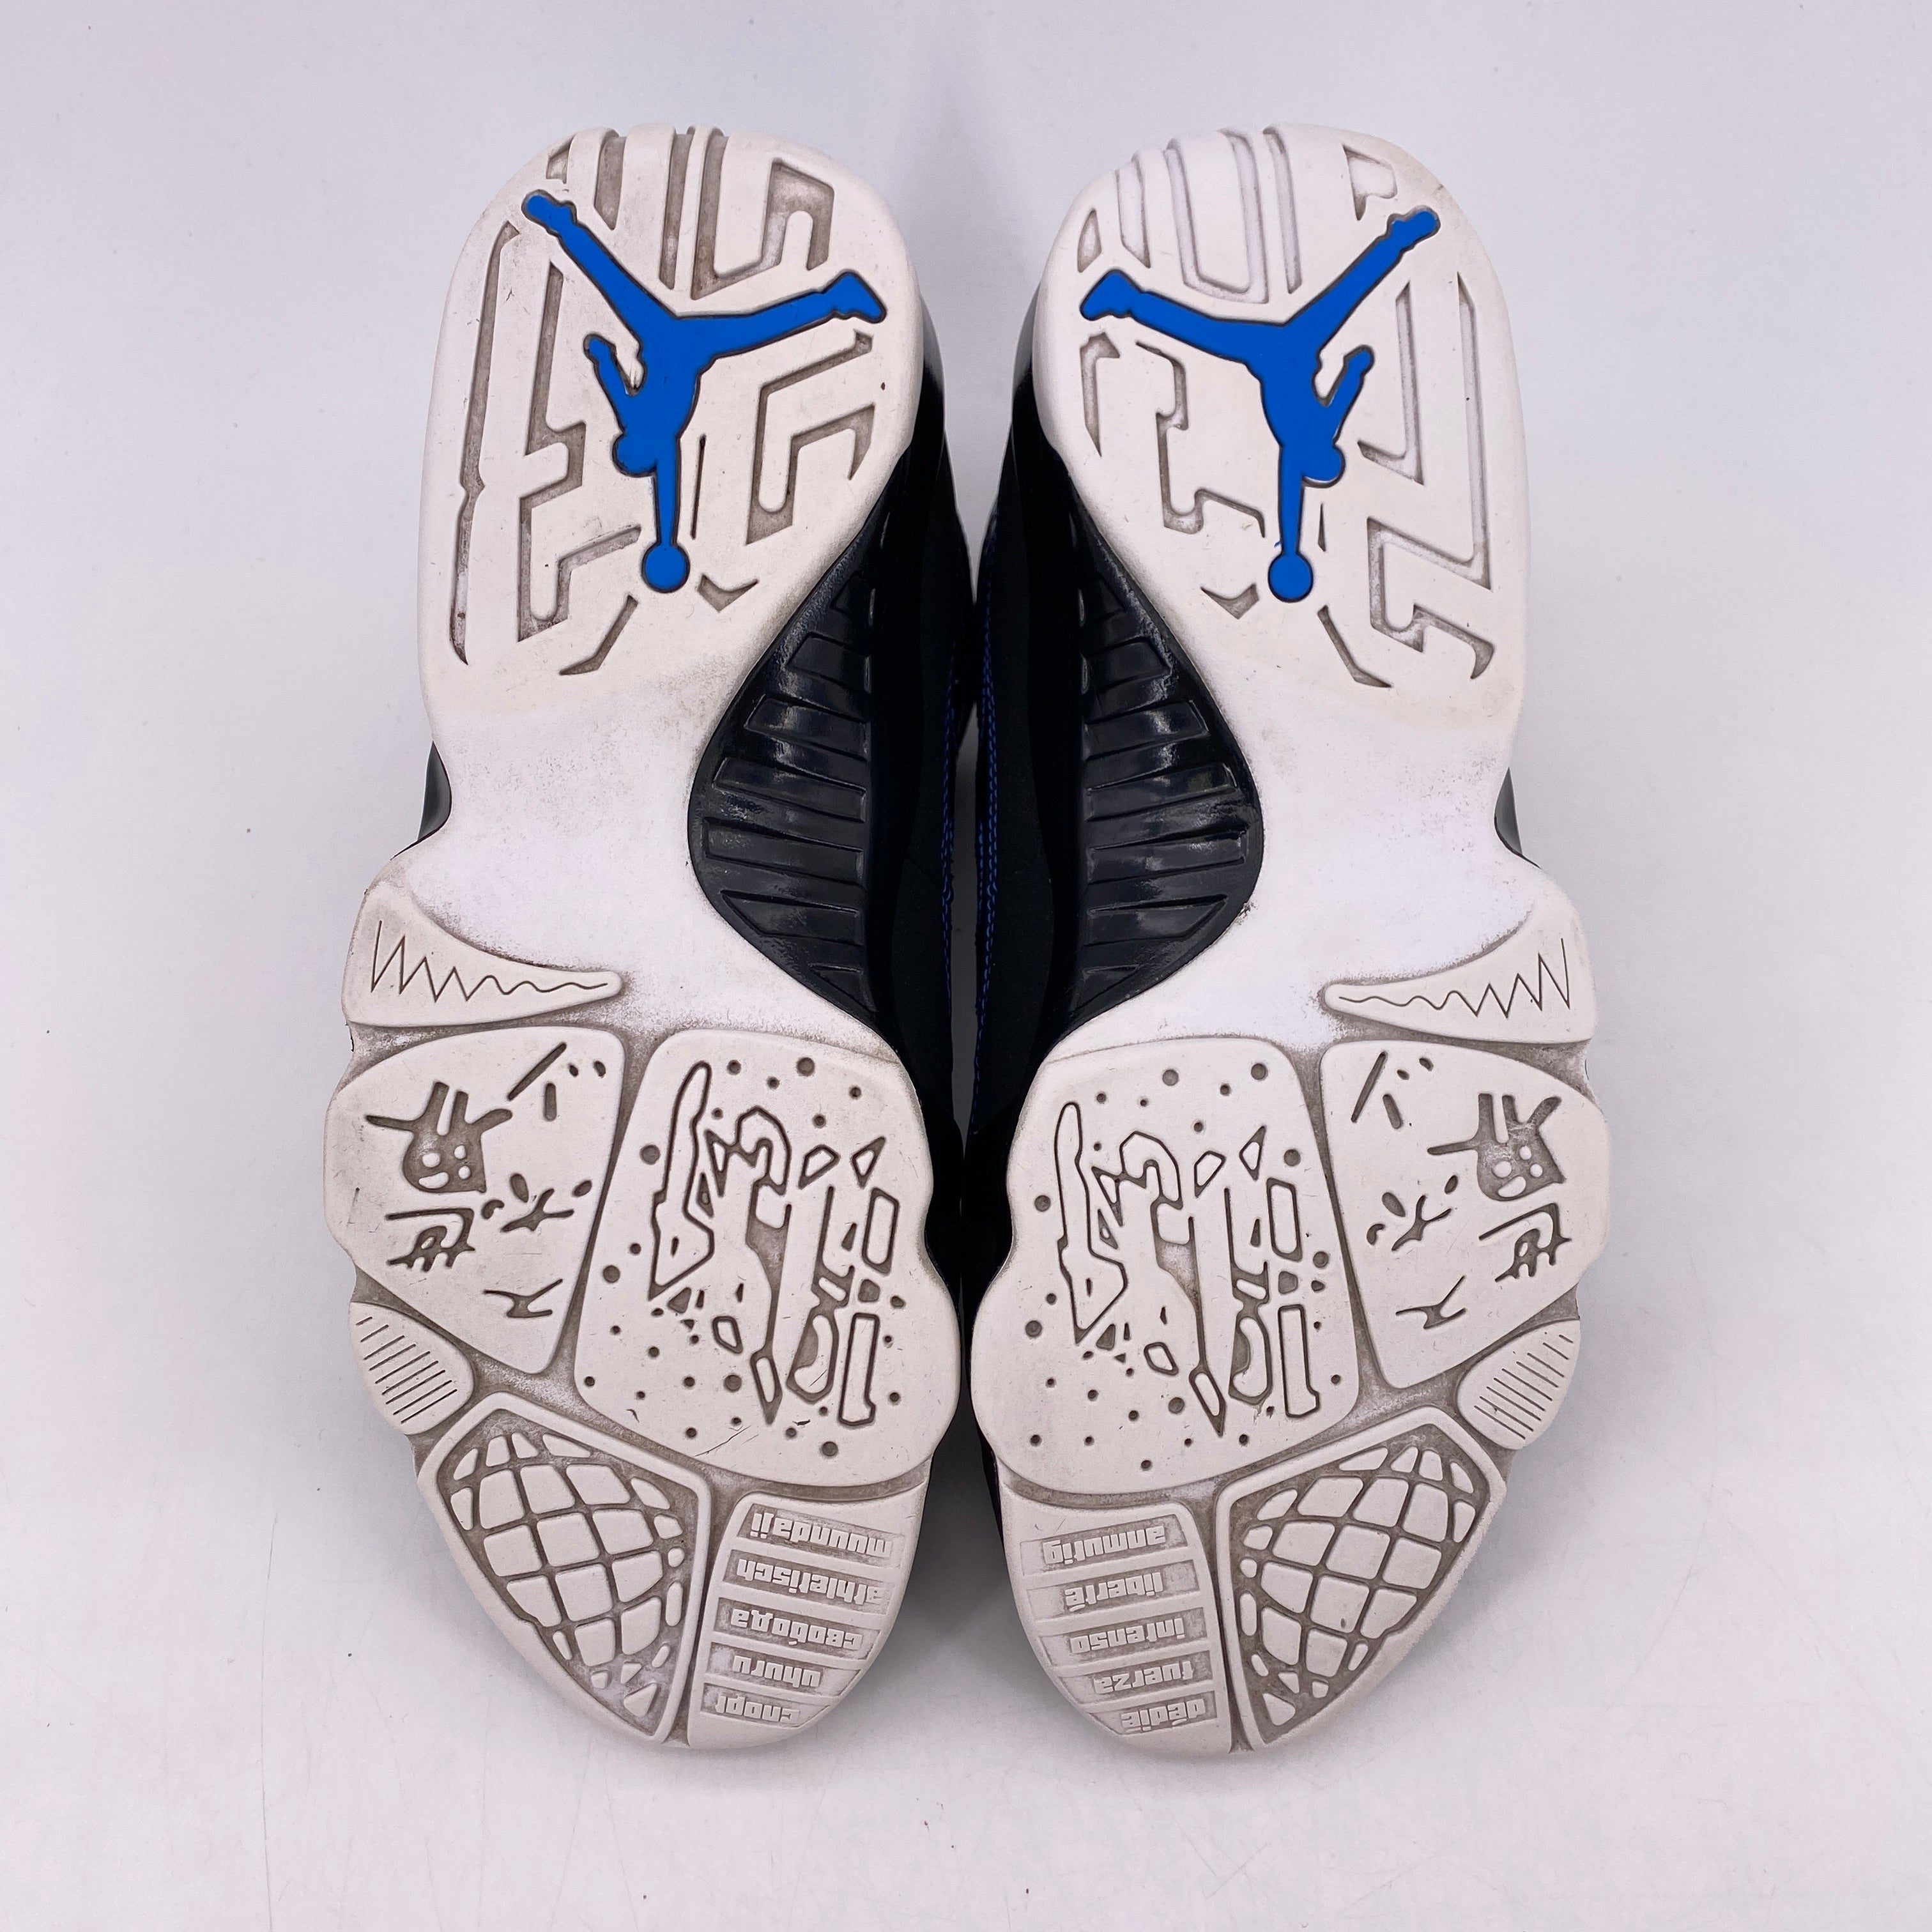 Air Jordan 9 Retro &quot;Photo Blue&quot; 2012 Used Size 12